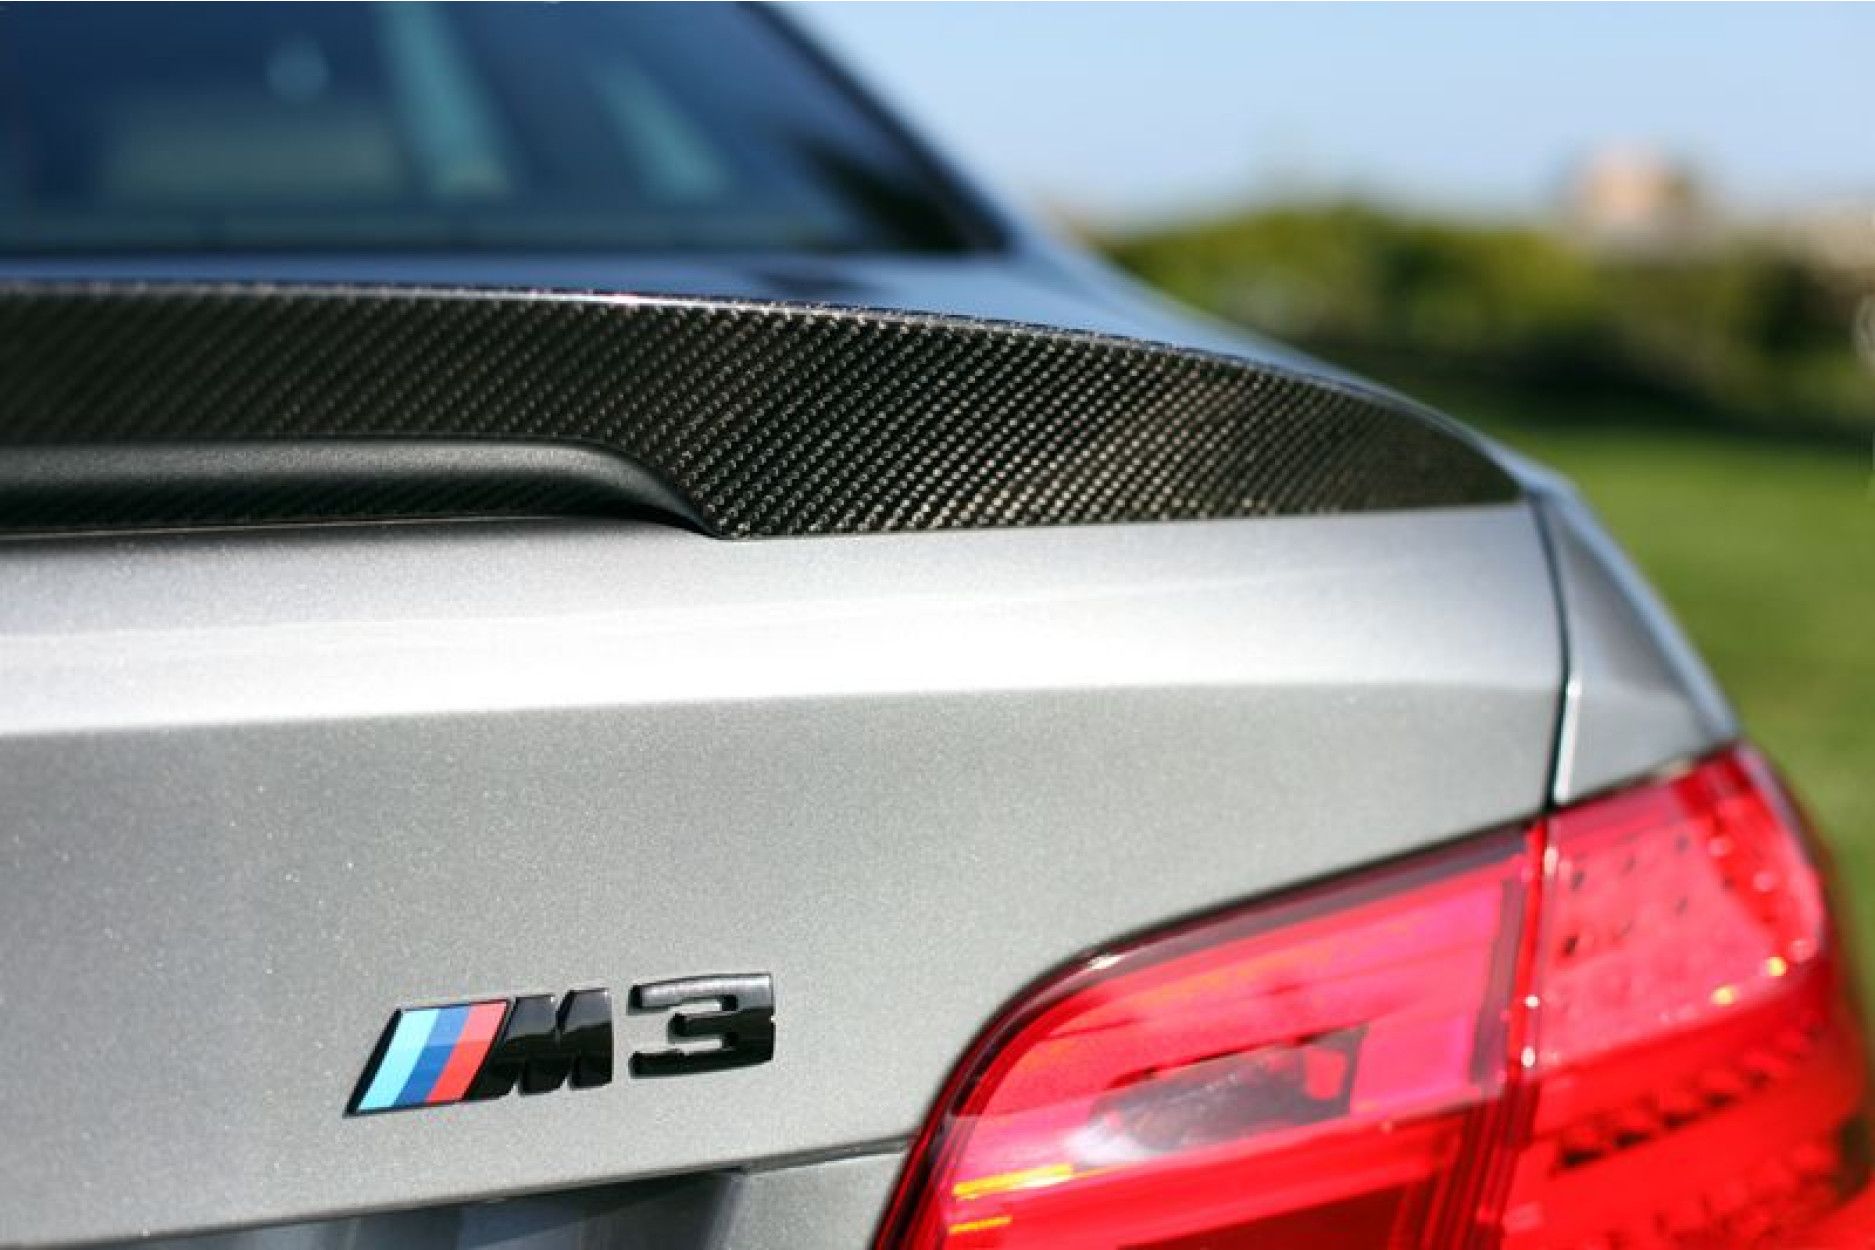 Boca carbon spoiler for BMW E92 M3 - similar performance